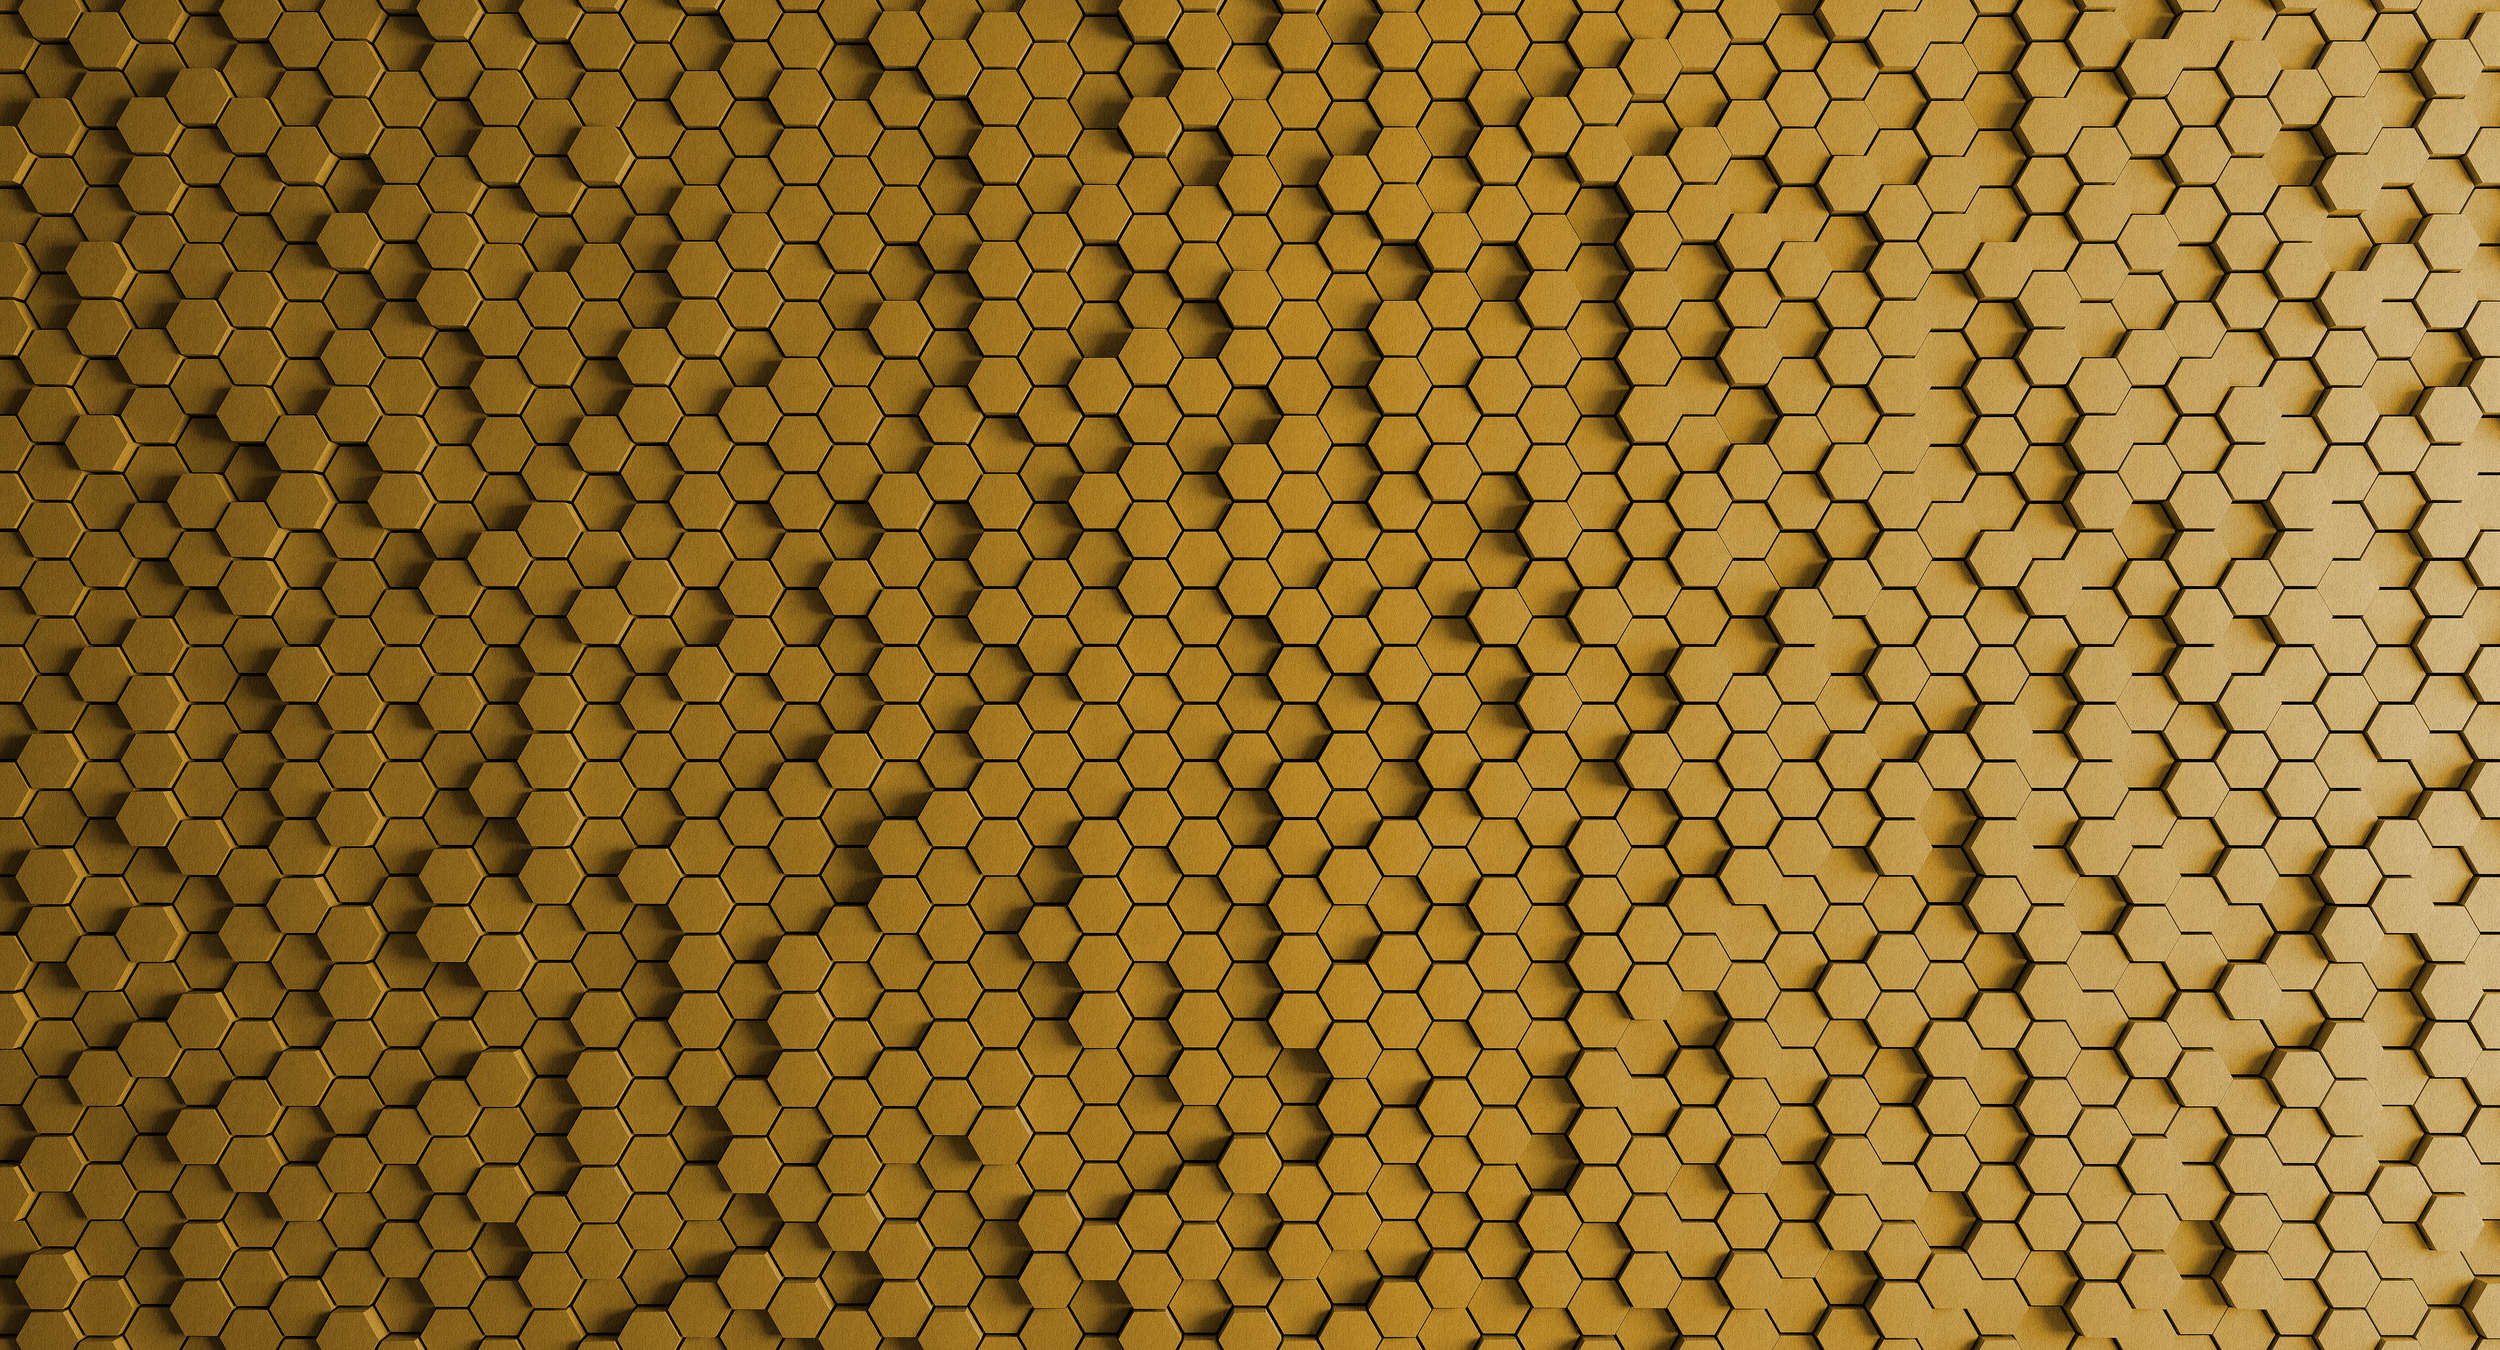             Honeycomb 1 - 3D wallpaper with yellow honeycomb design in felt structure - Yellow, Black | Premium smooth fleece
        